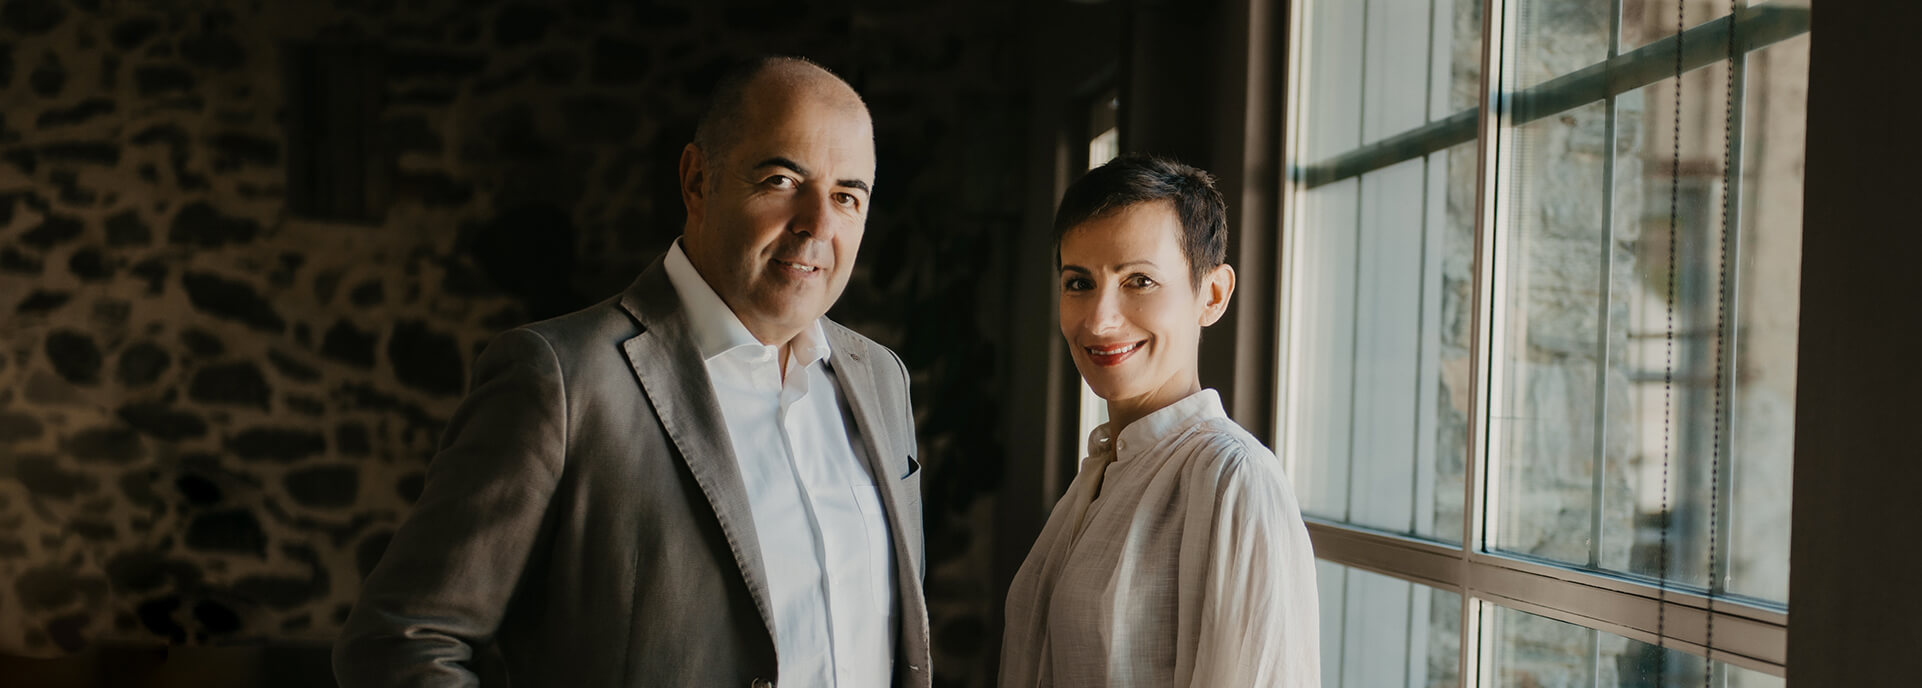 Nicola Osmetti e Consuelo Orsingher - Nicons